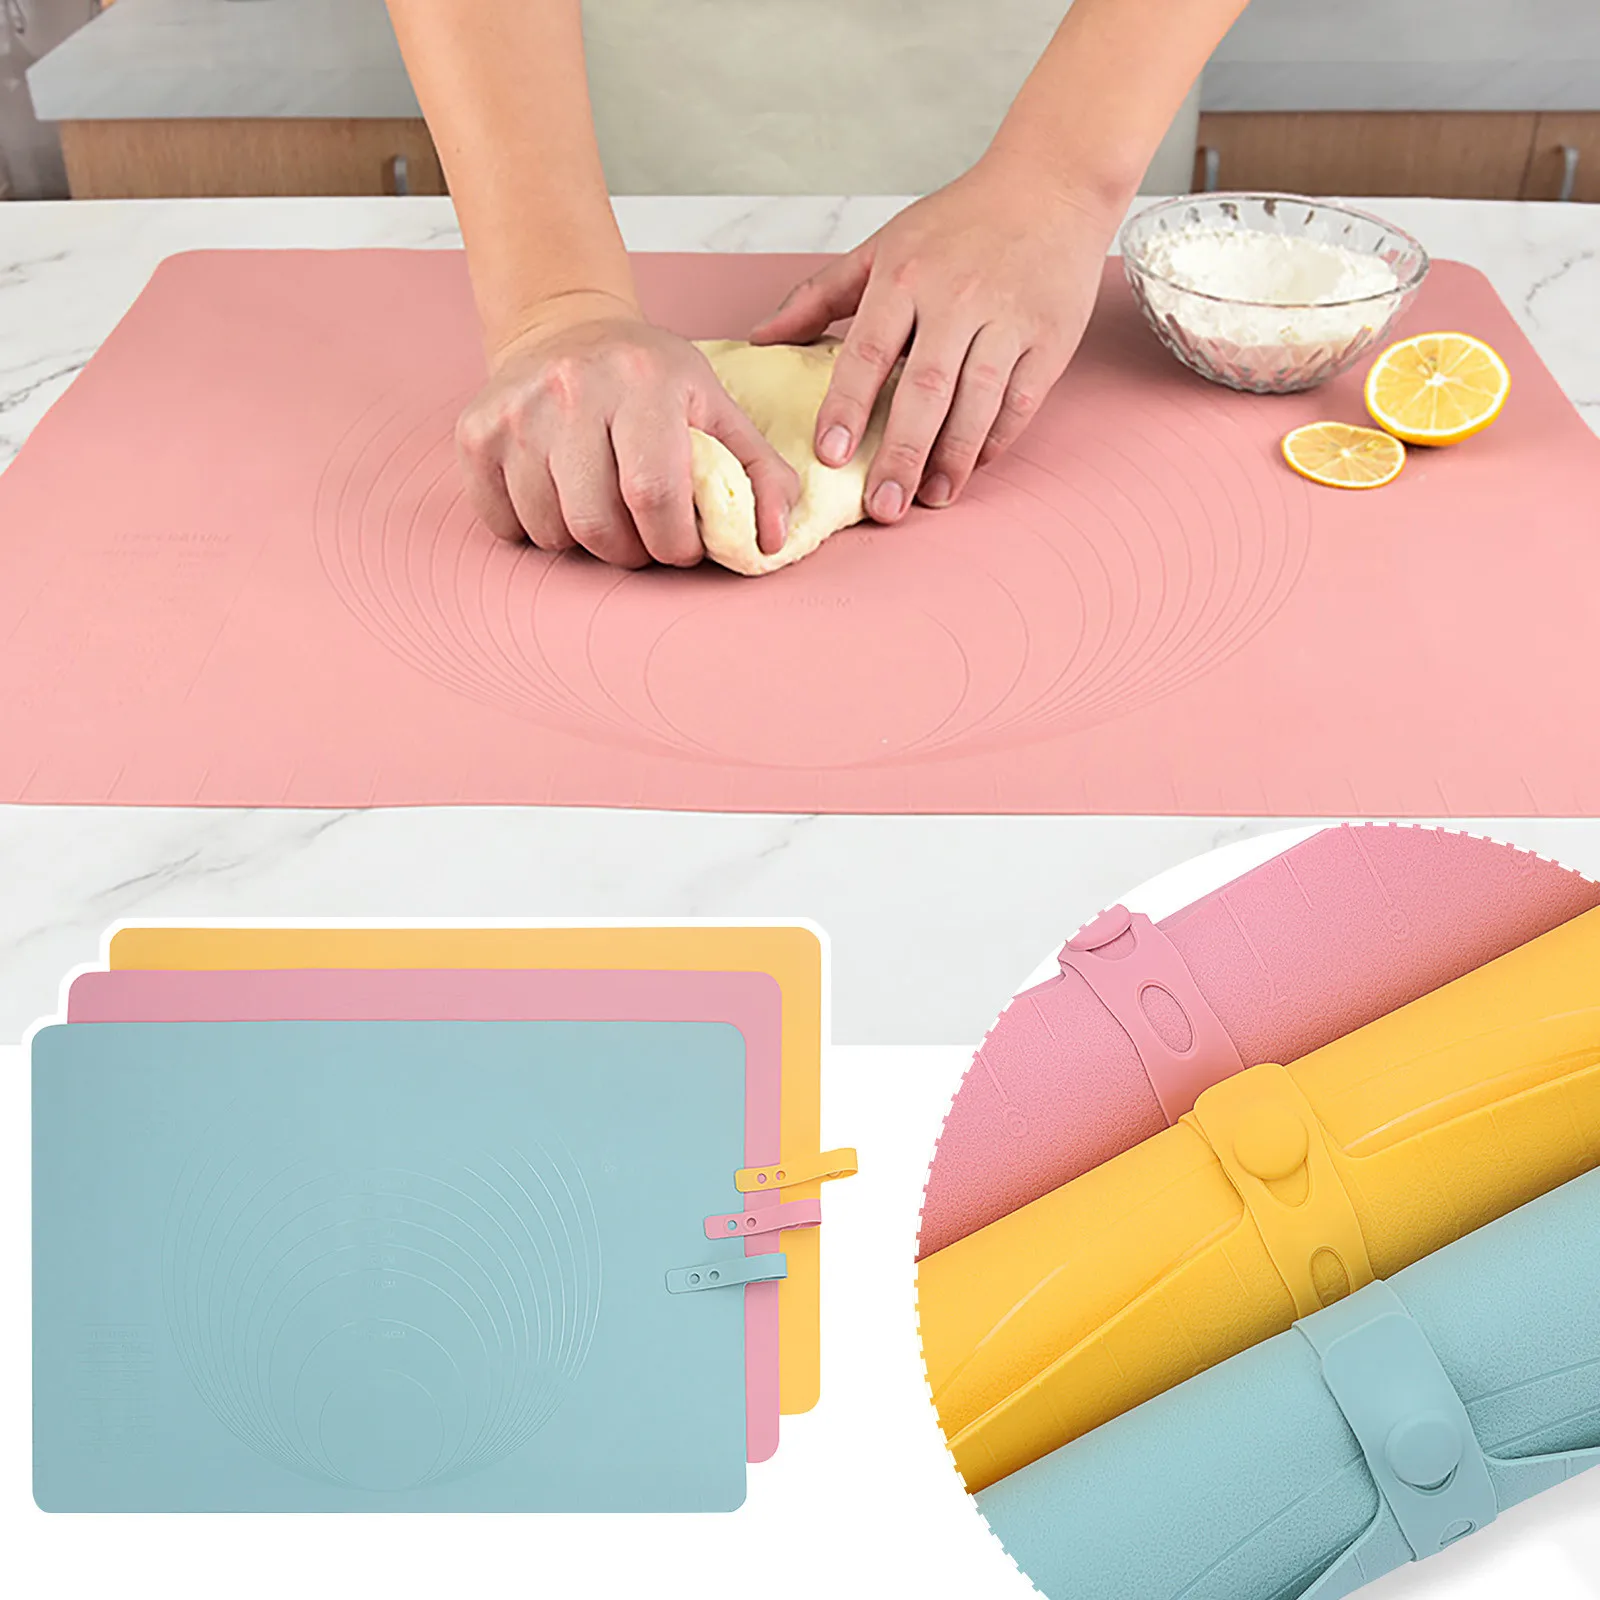 https://ae01.alicdn.com/kf/S9a4b3e4e6832419f8dec819bfd89cb75n/60-40cm-Non-Stick-Silicone-Baking-Mat-Kneading-Dough-Pad-Paste-Flour-Table-Sheet-Heat-Resistant.jpg